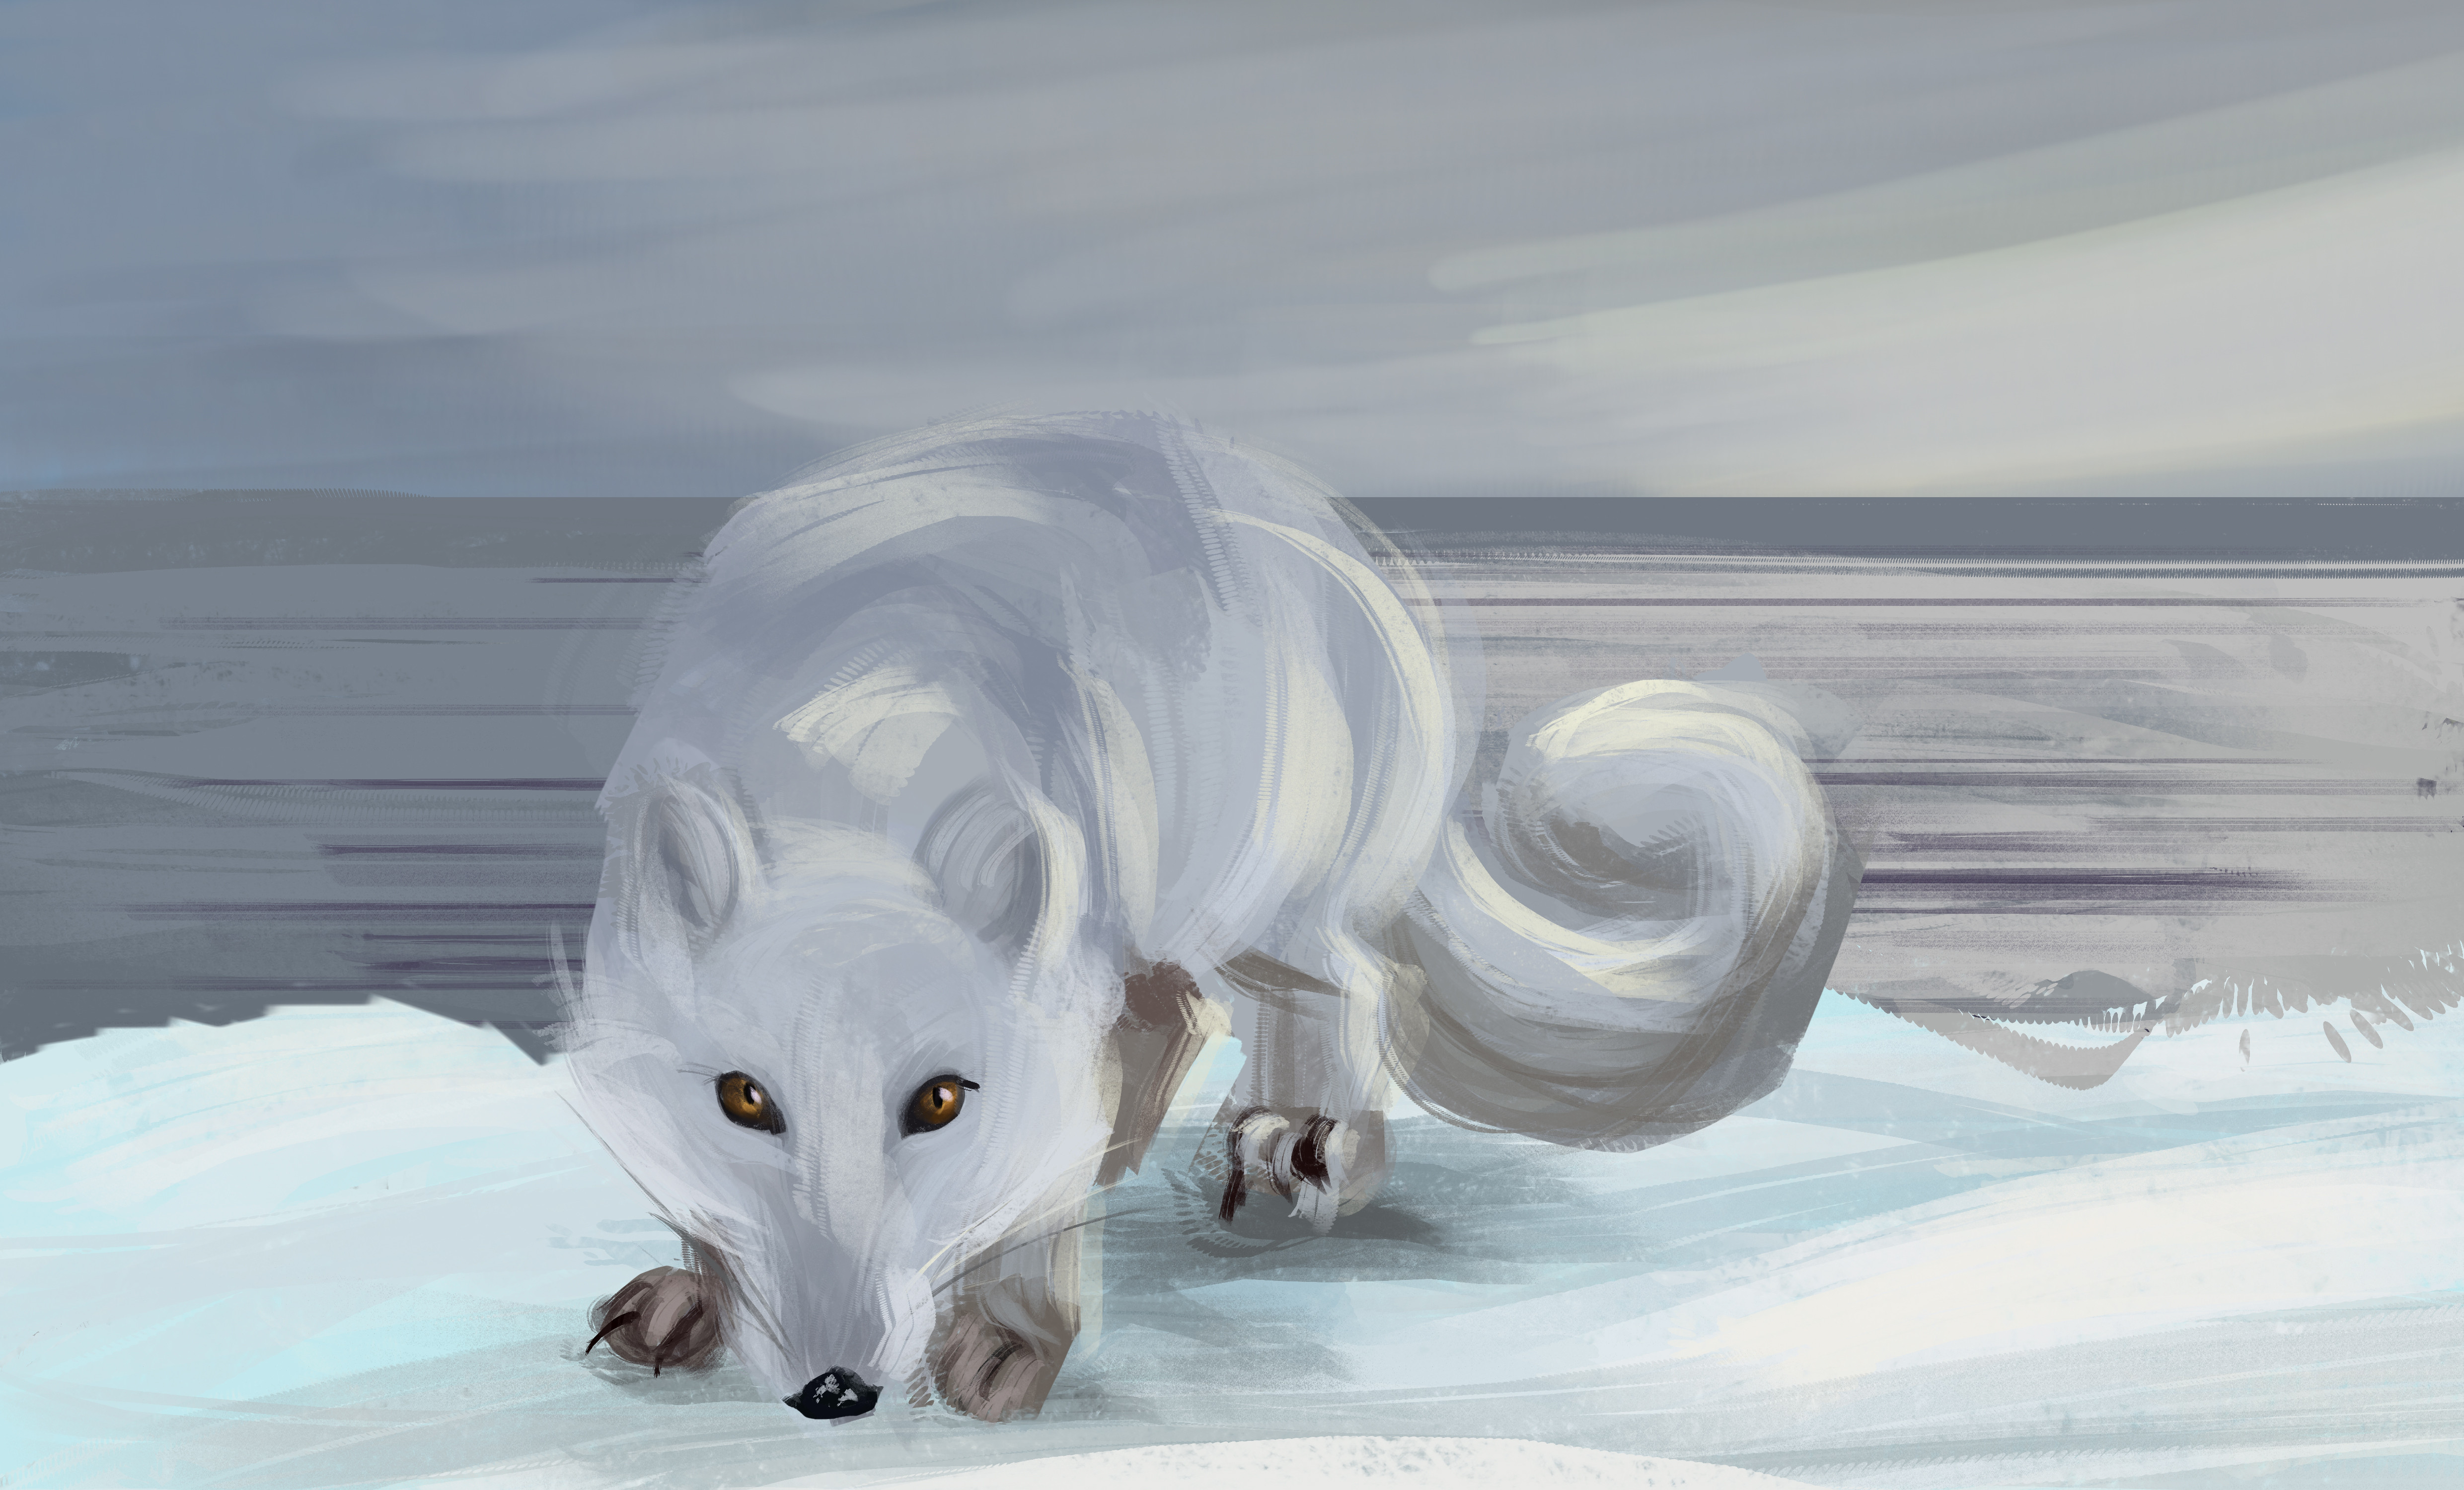 Arctic Fox Drawing Sketch